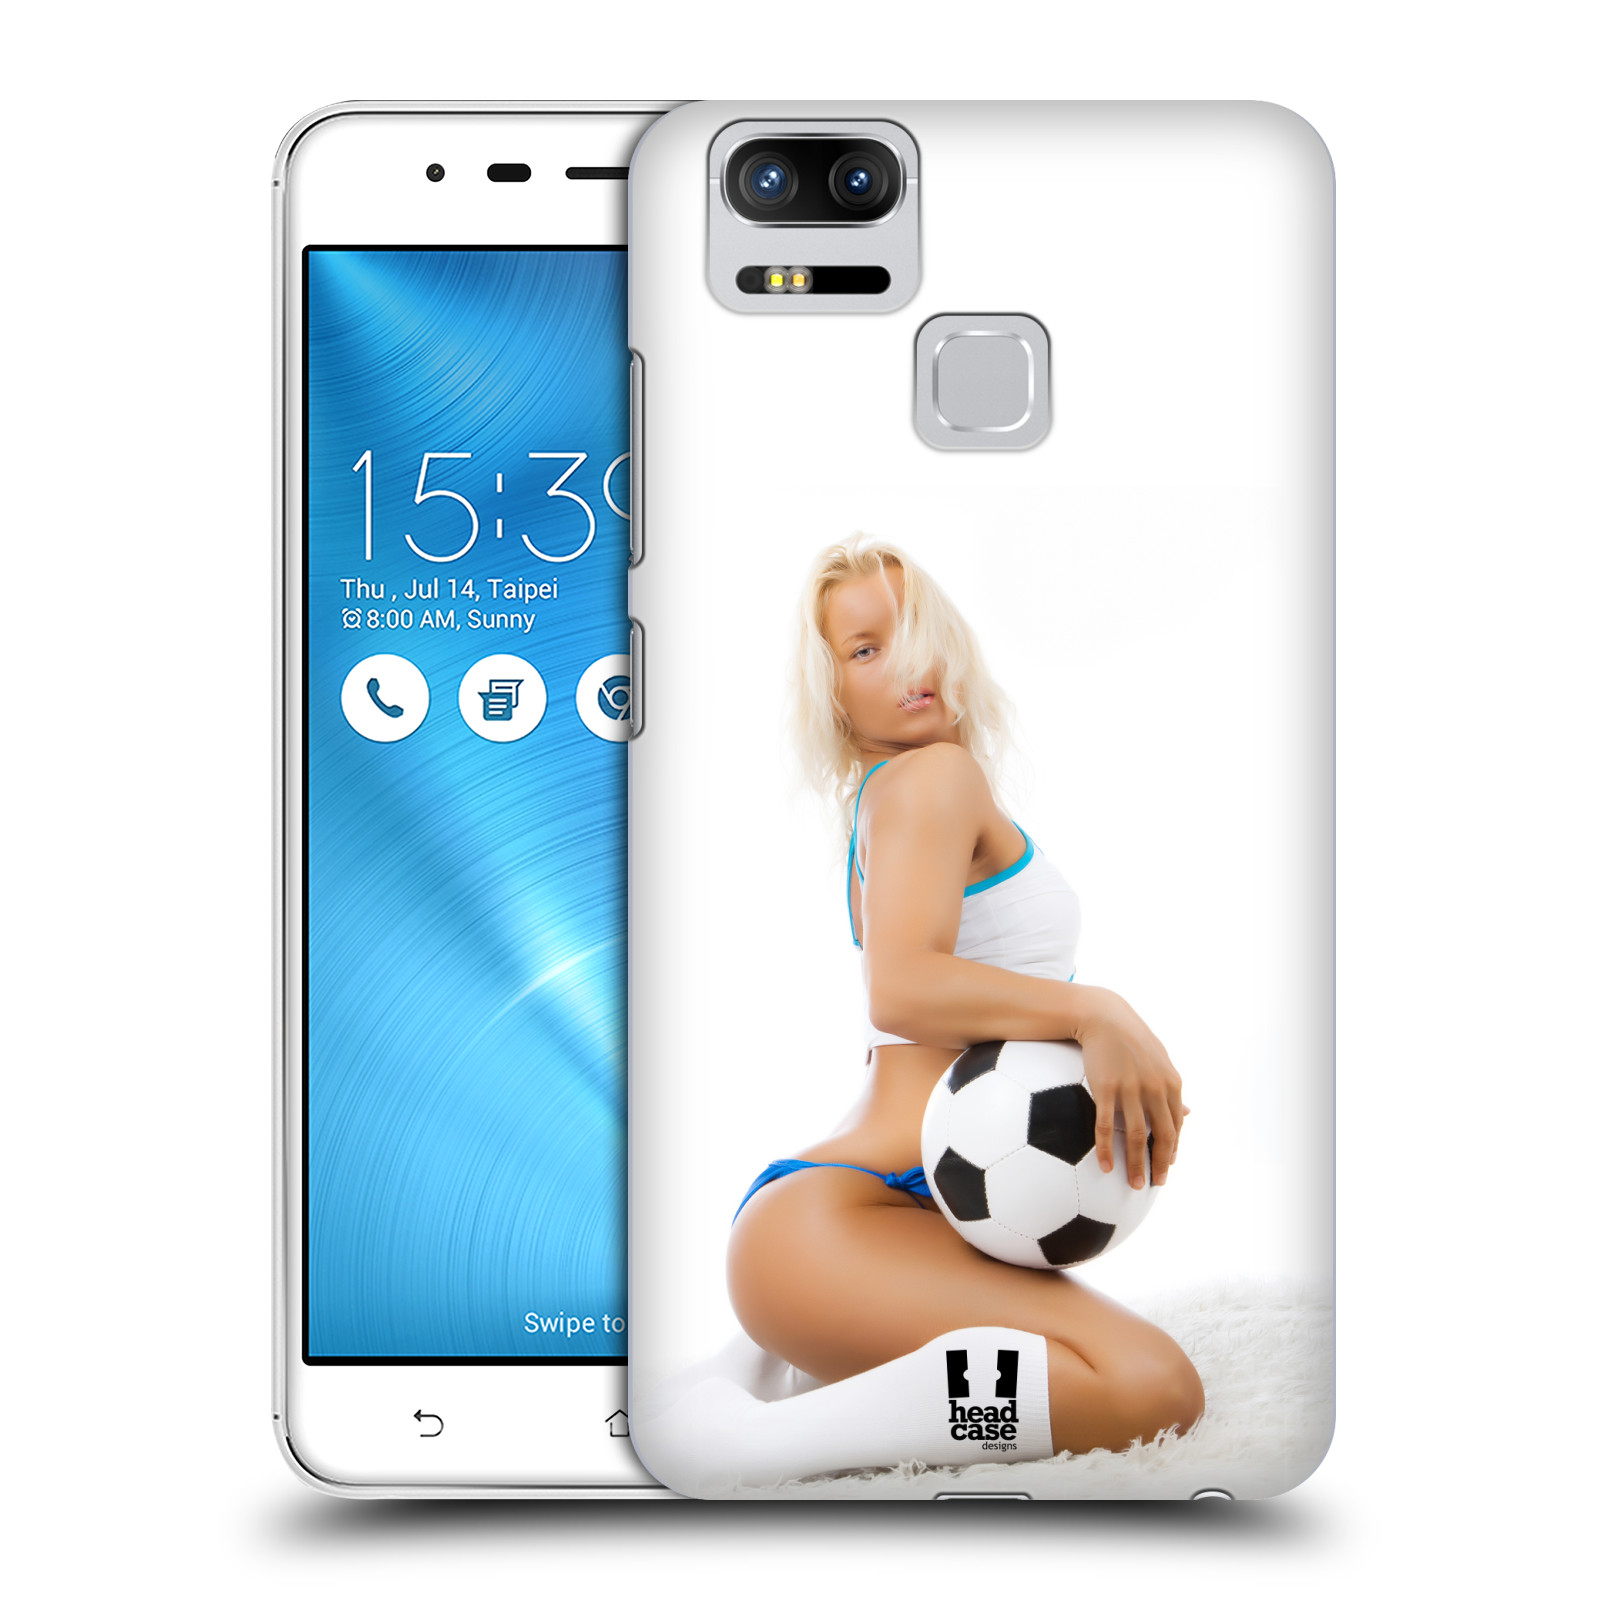 HEAD CASE plastový obal na mobil Asus Zenfone 3 Zoom ZE553KL vzor Fotbalové modelky BLONDÝNKA